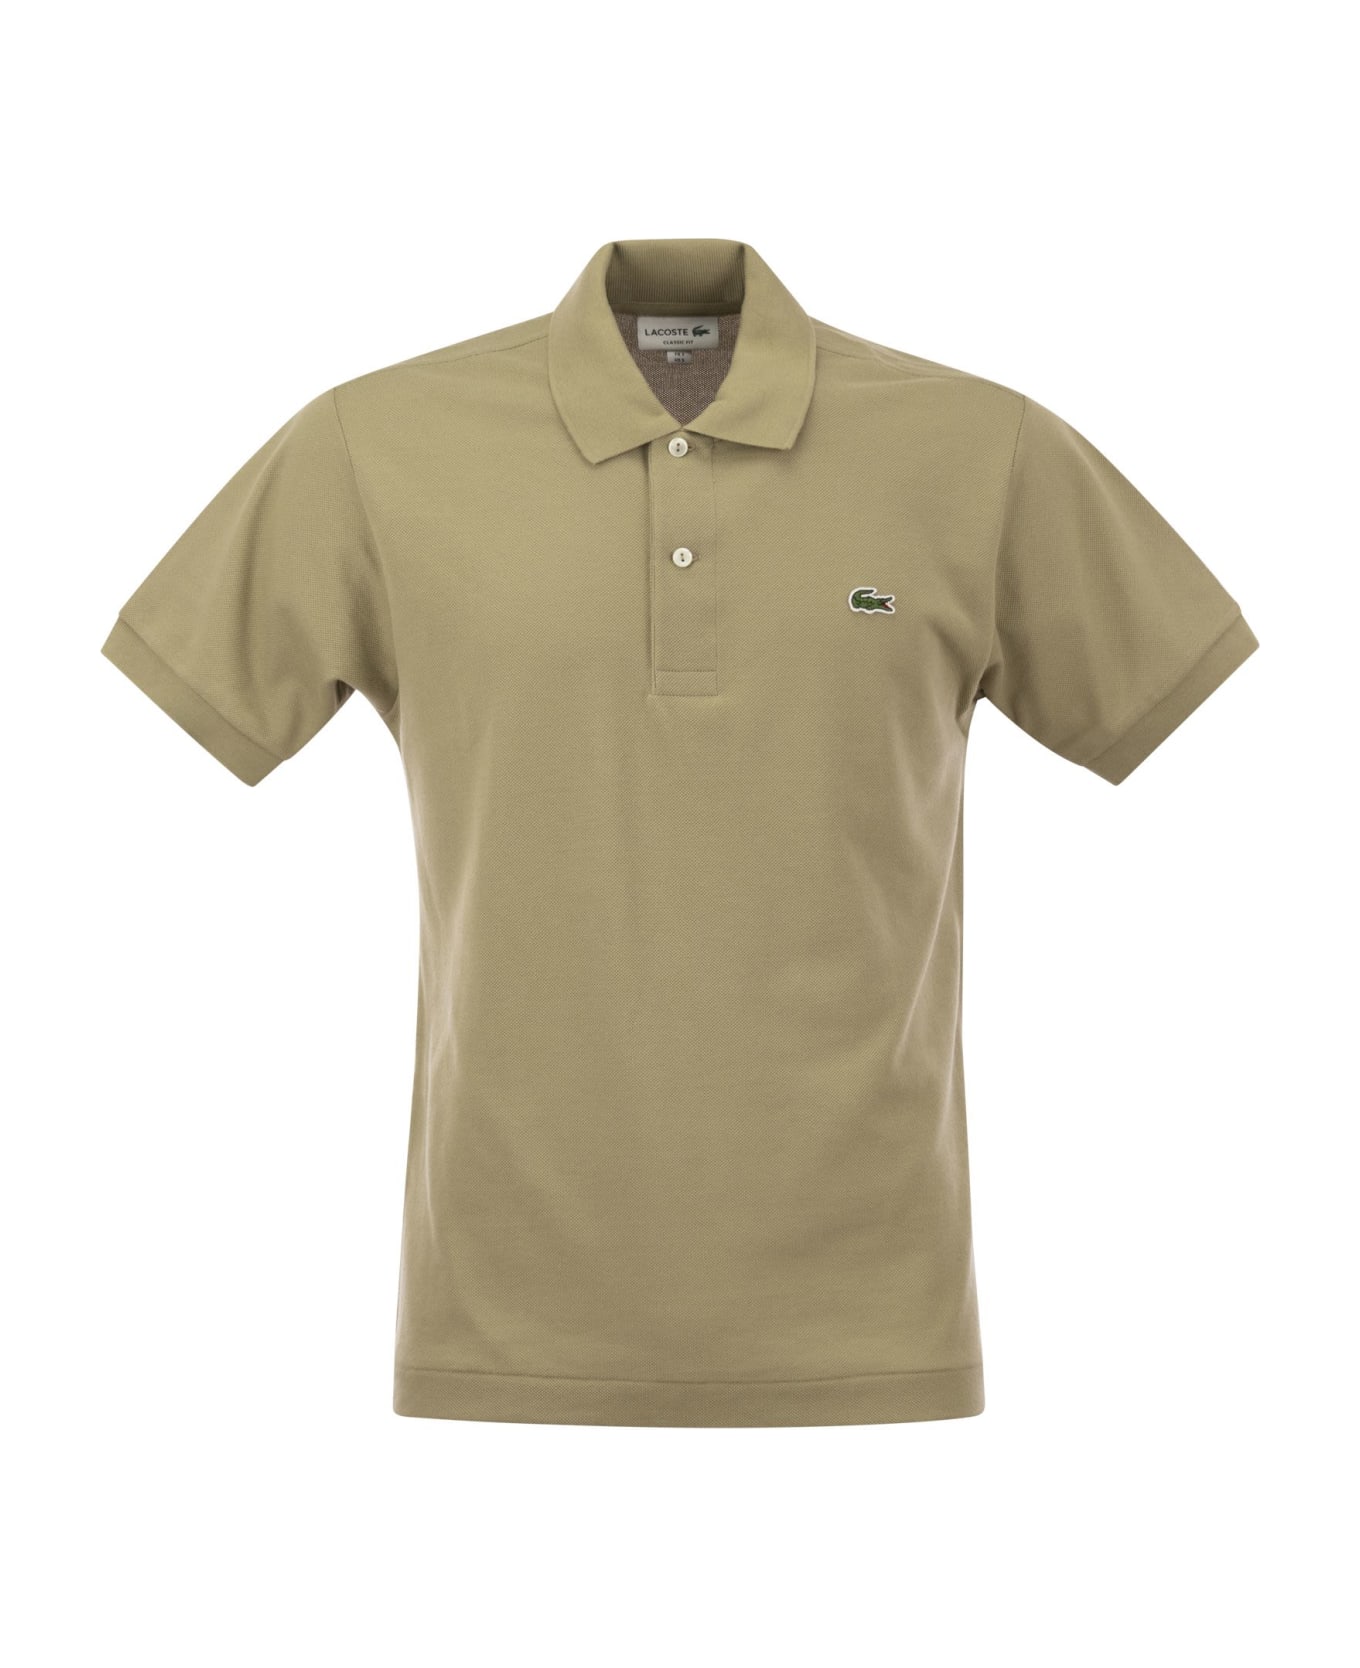 Lacoste Classic Fit Cotton Pique Polo Shirt - Corda